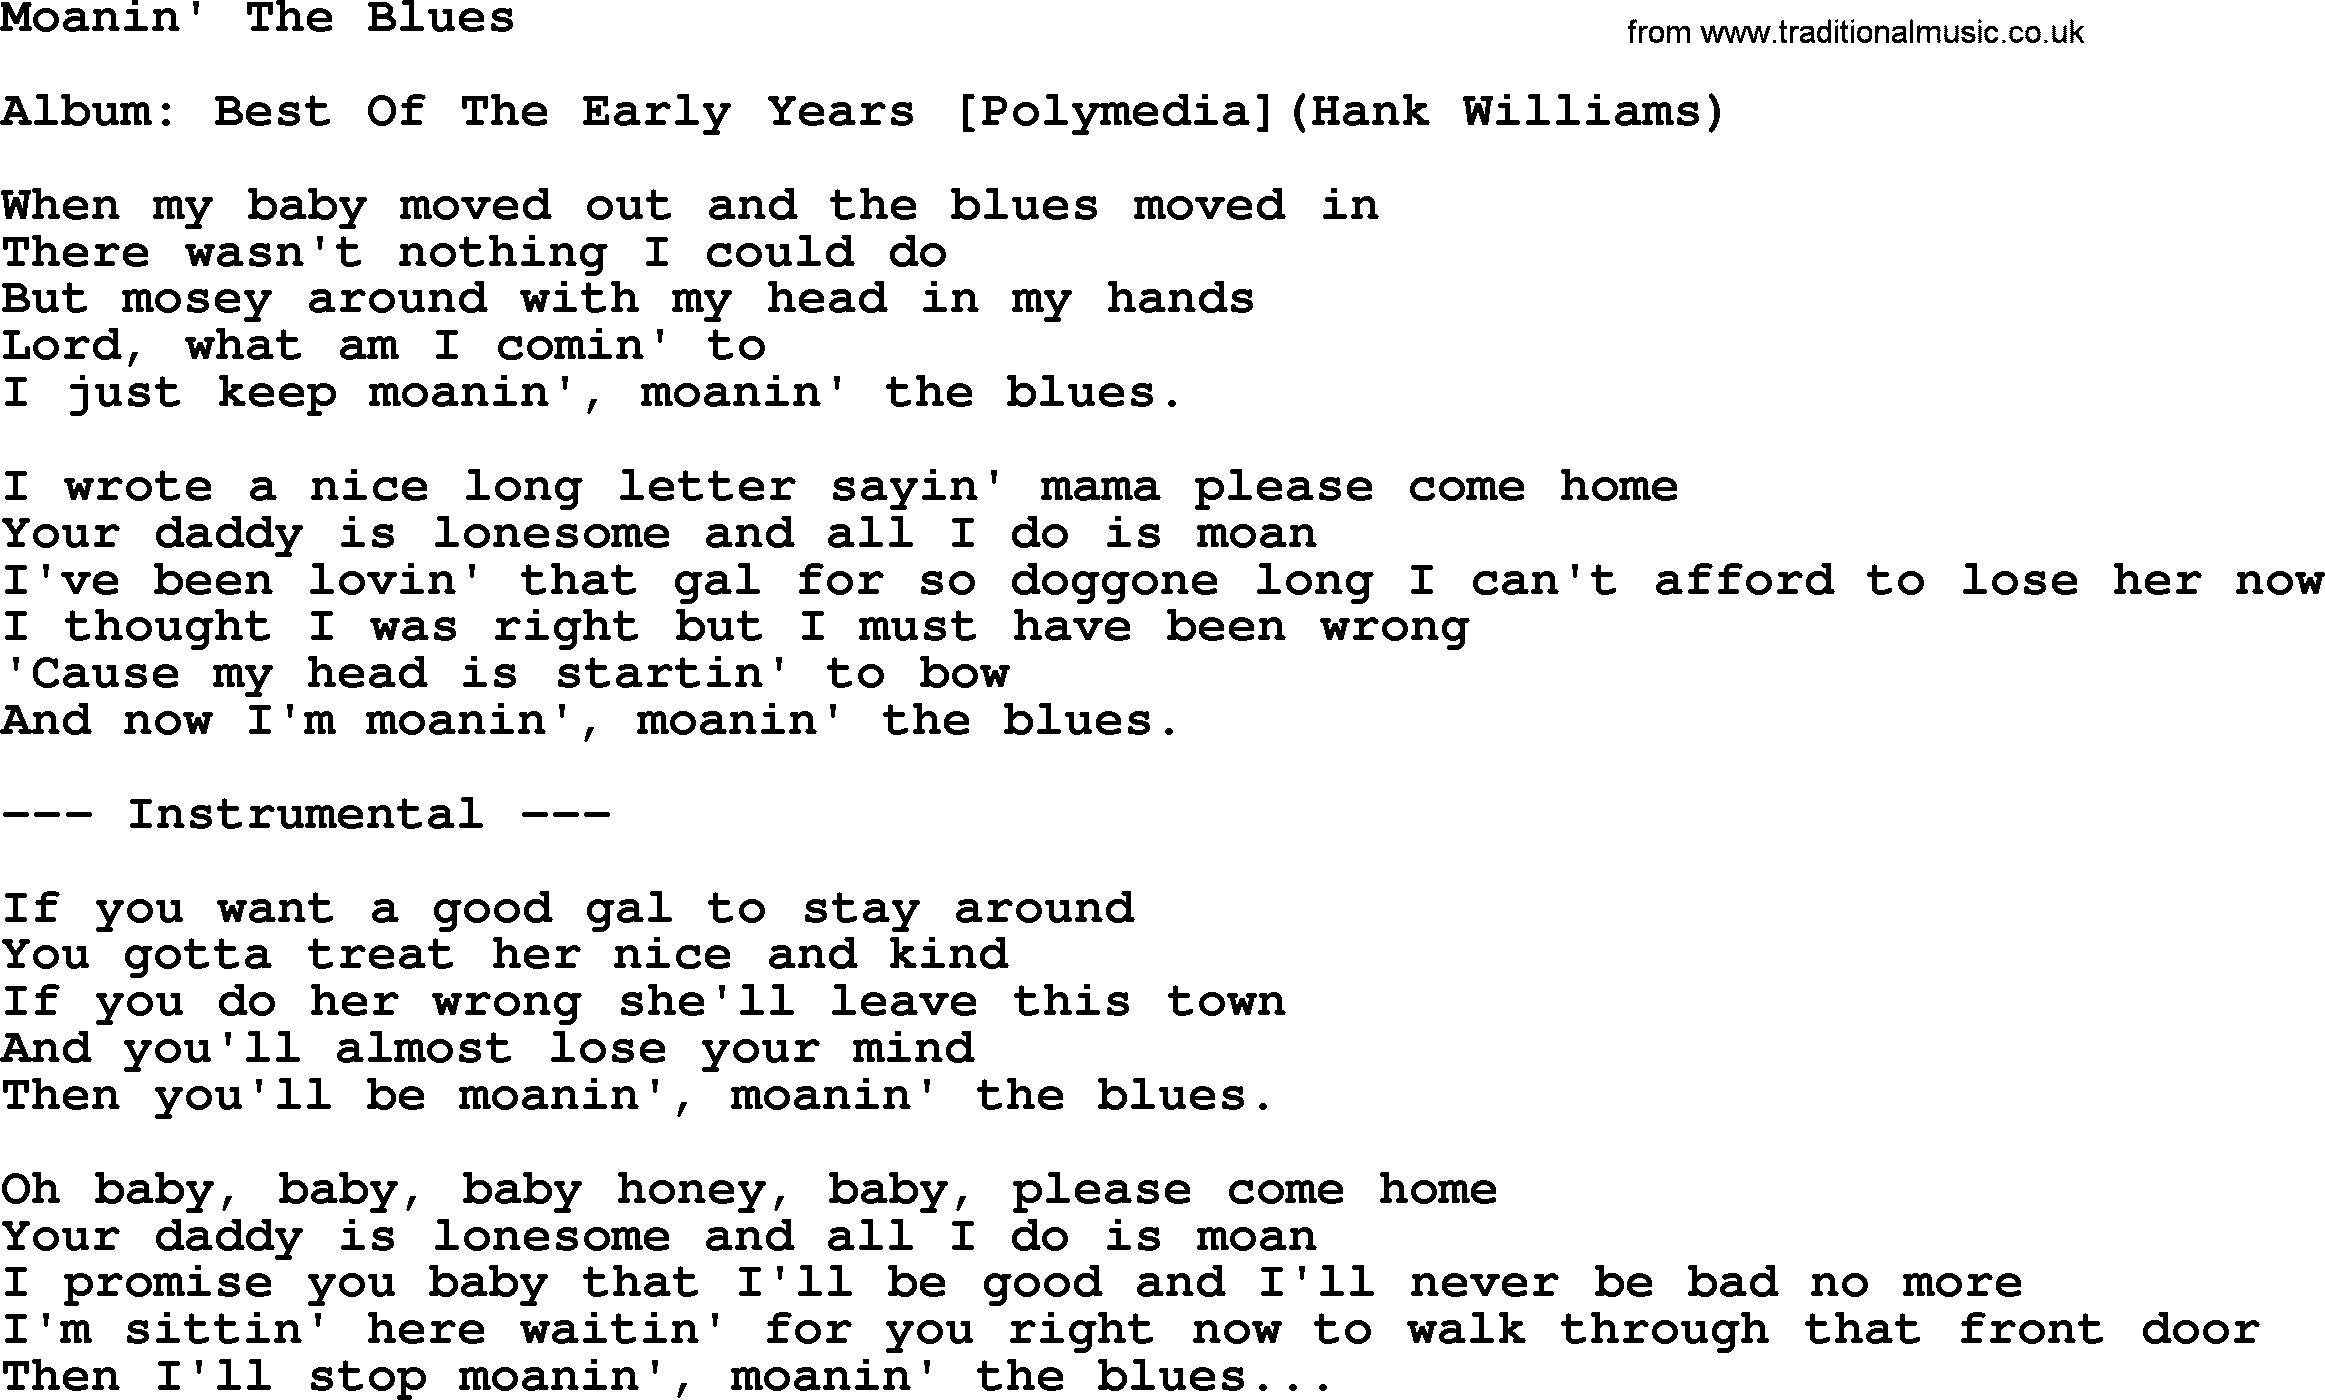 Hank Williams song Moanin' The Blues, lyrics